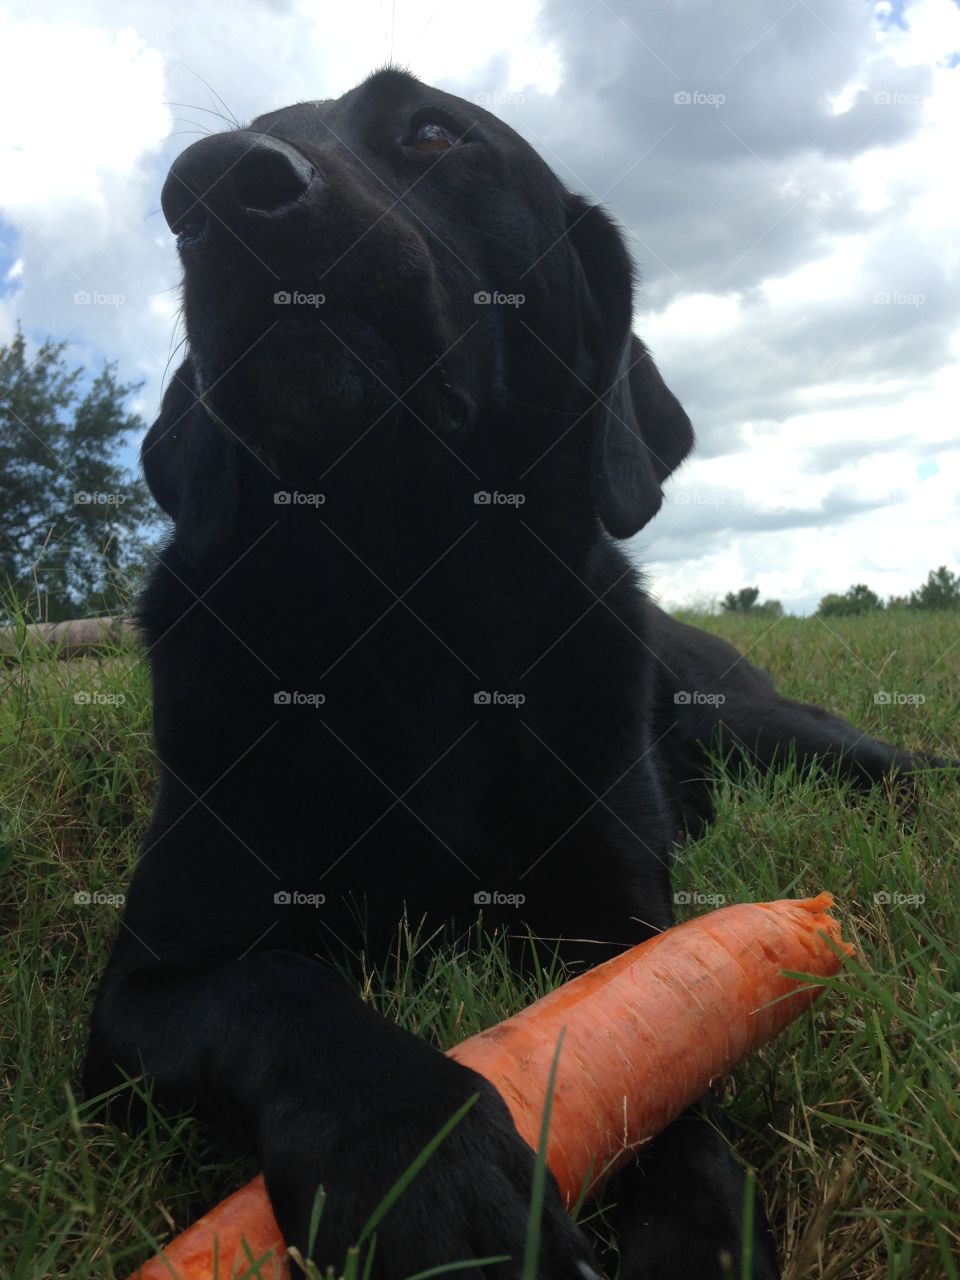 My carrot. Enjoying her carrot in the grass